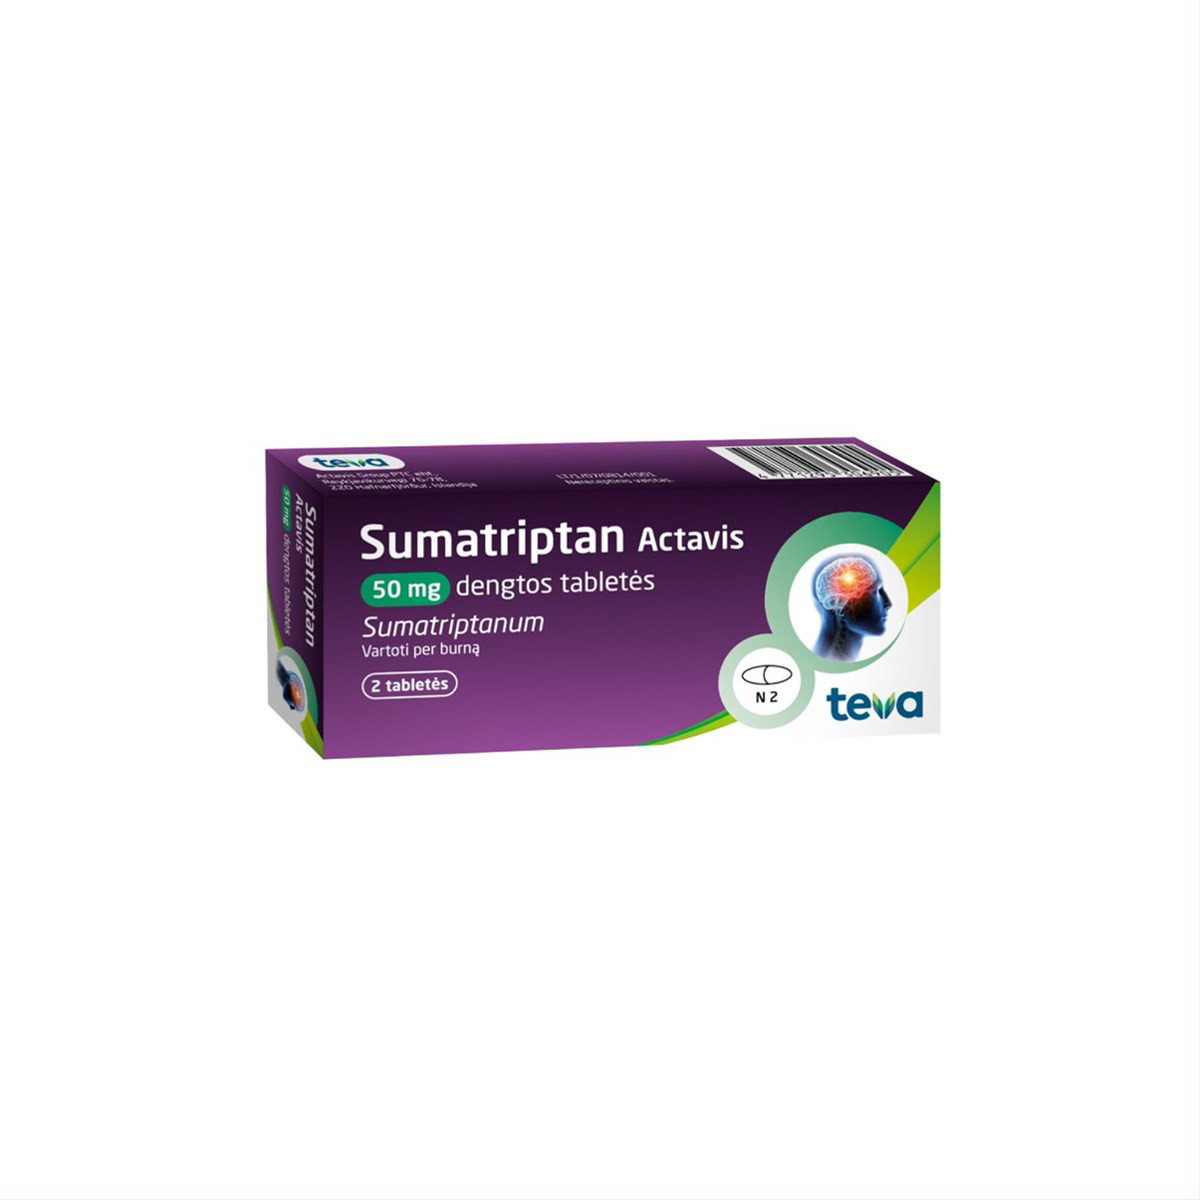 SUMATRIPTAN ACTAVIS, 50 mg, dengtos tabletės, N2